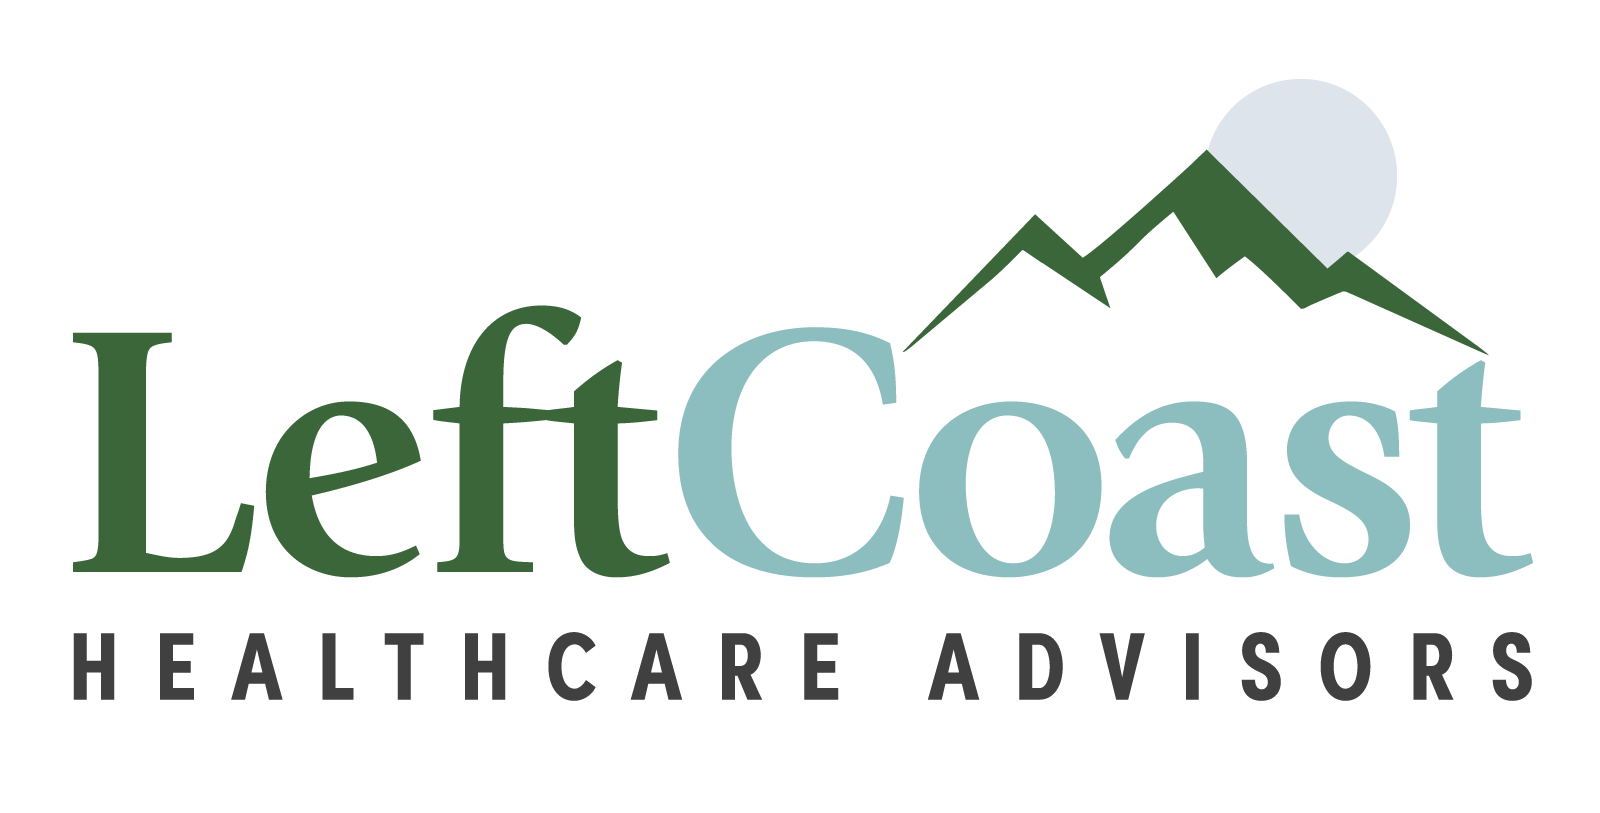 Left Coast Healthcare Advisors